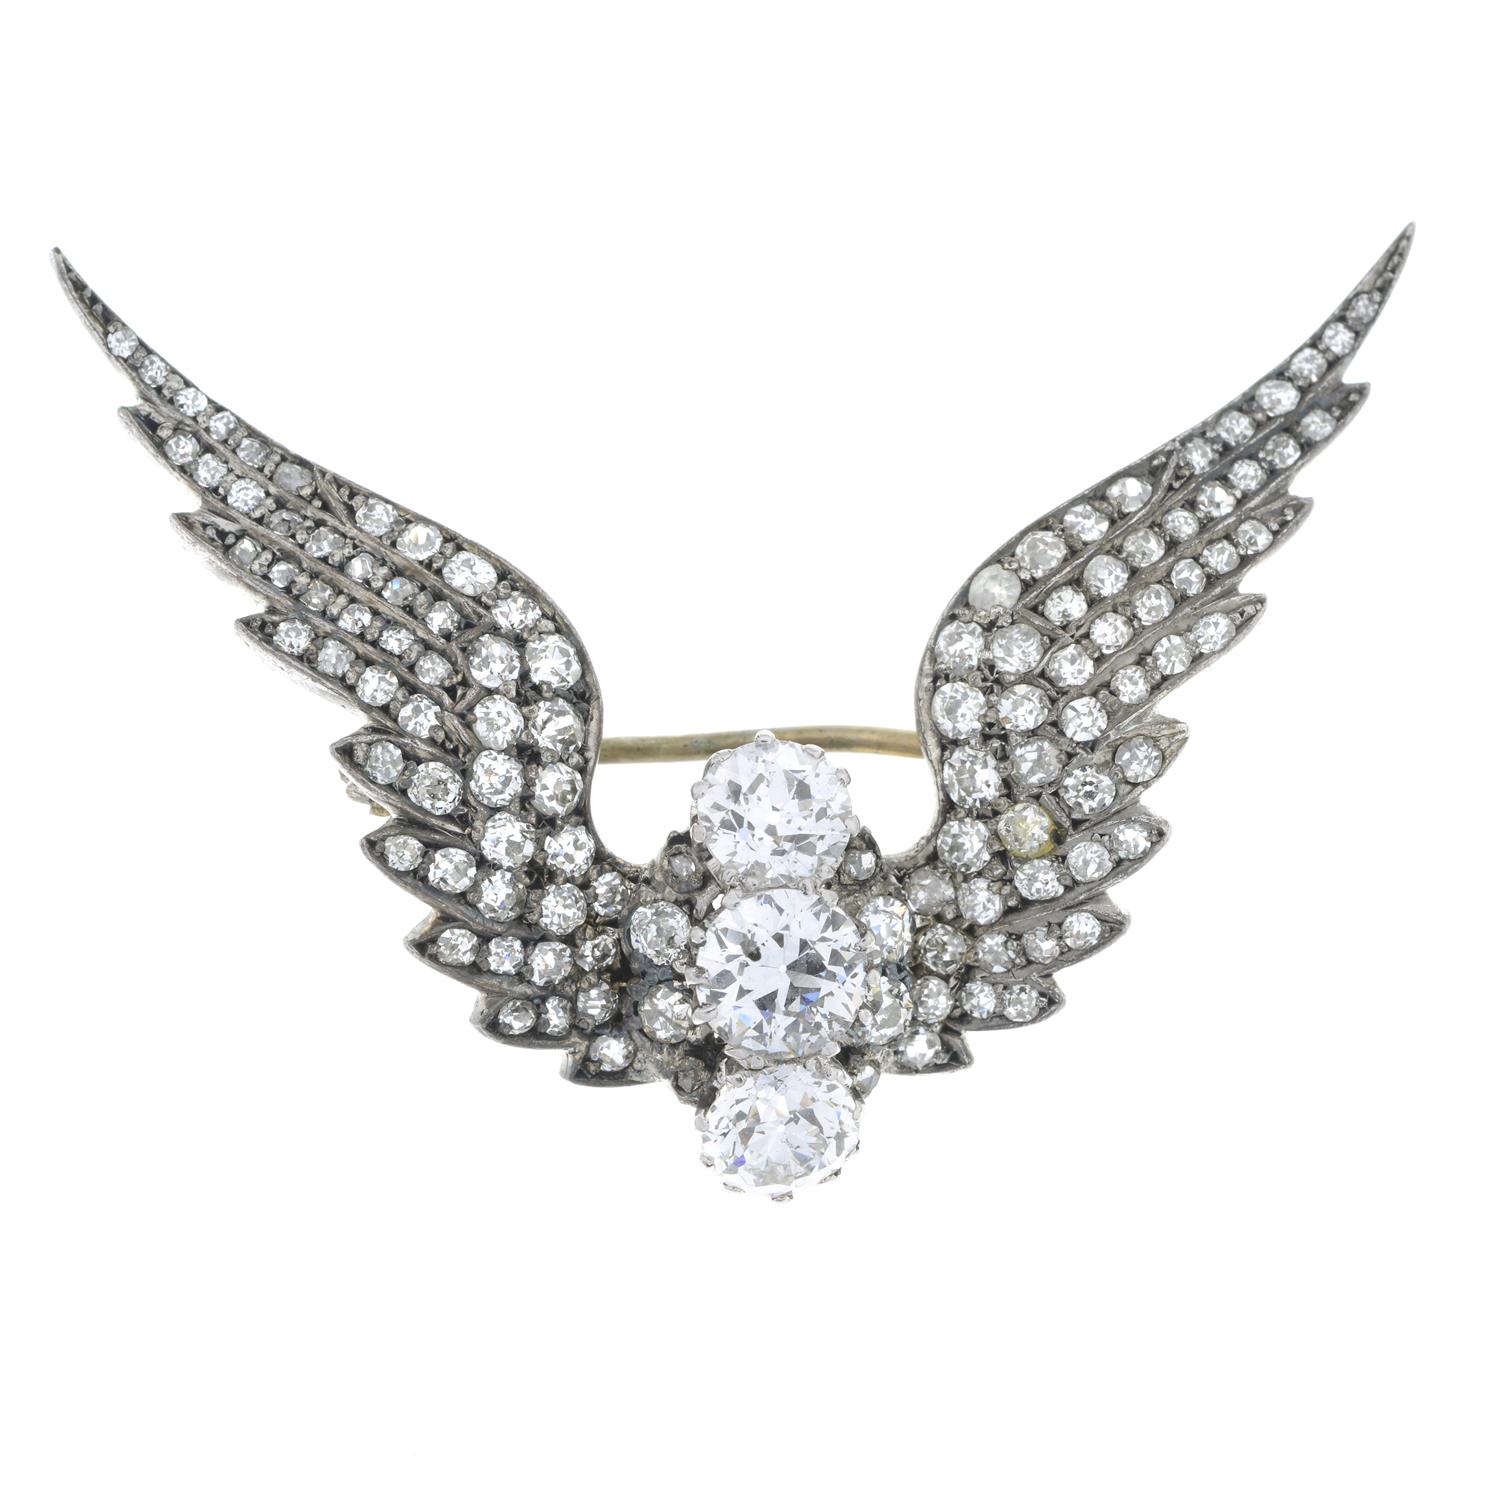 Victorian old-cut diamond wings brooch - Image 2 of 4